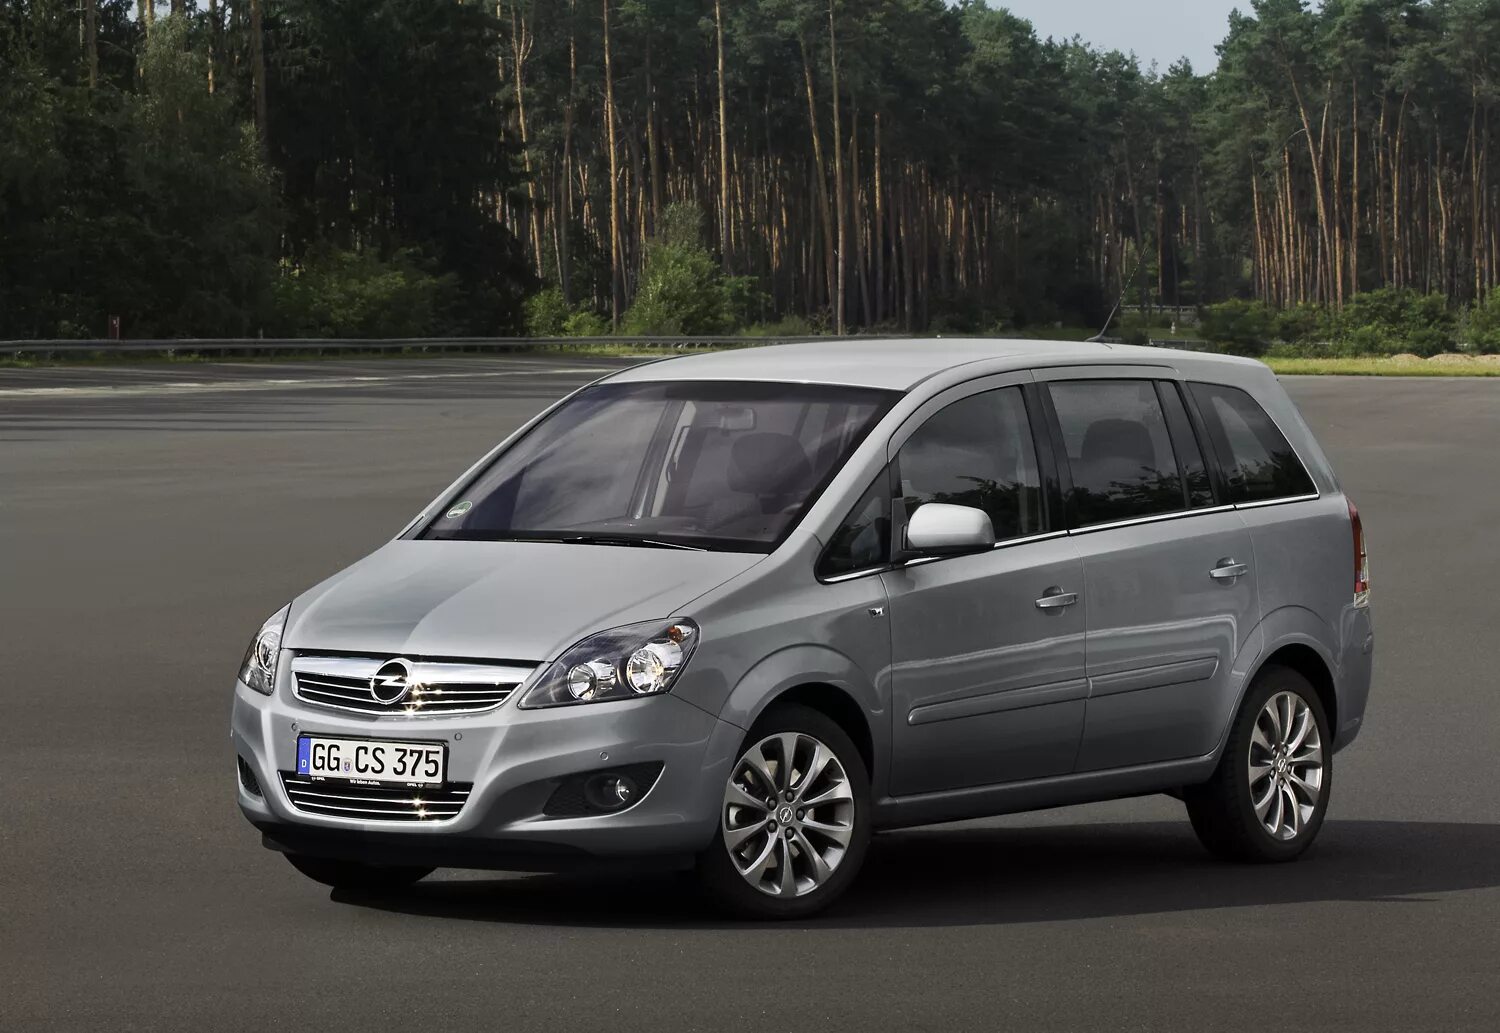 Opel Zafira b 2014. Opel Zafira b 2011. Опель Зафира б 2011. Зафира 2. Зафира 2 дизель купить